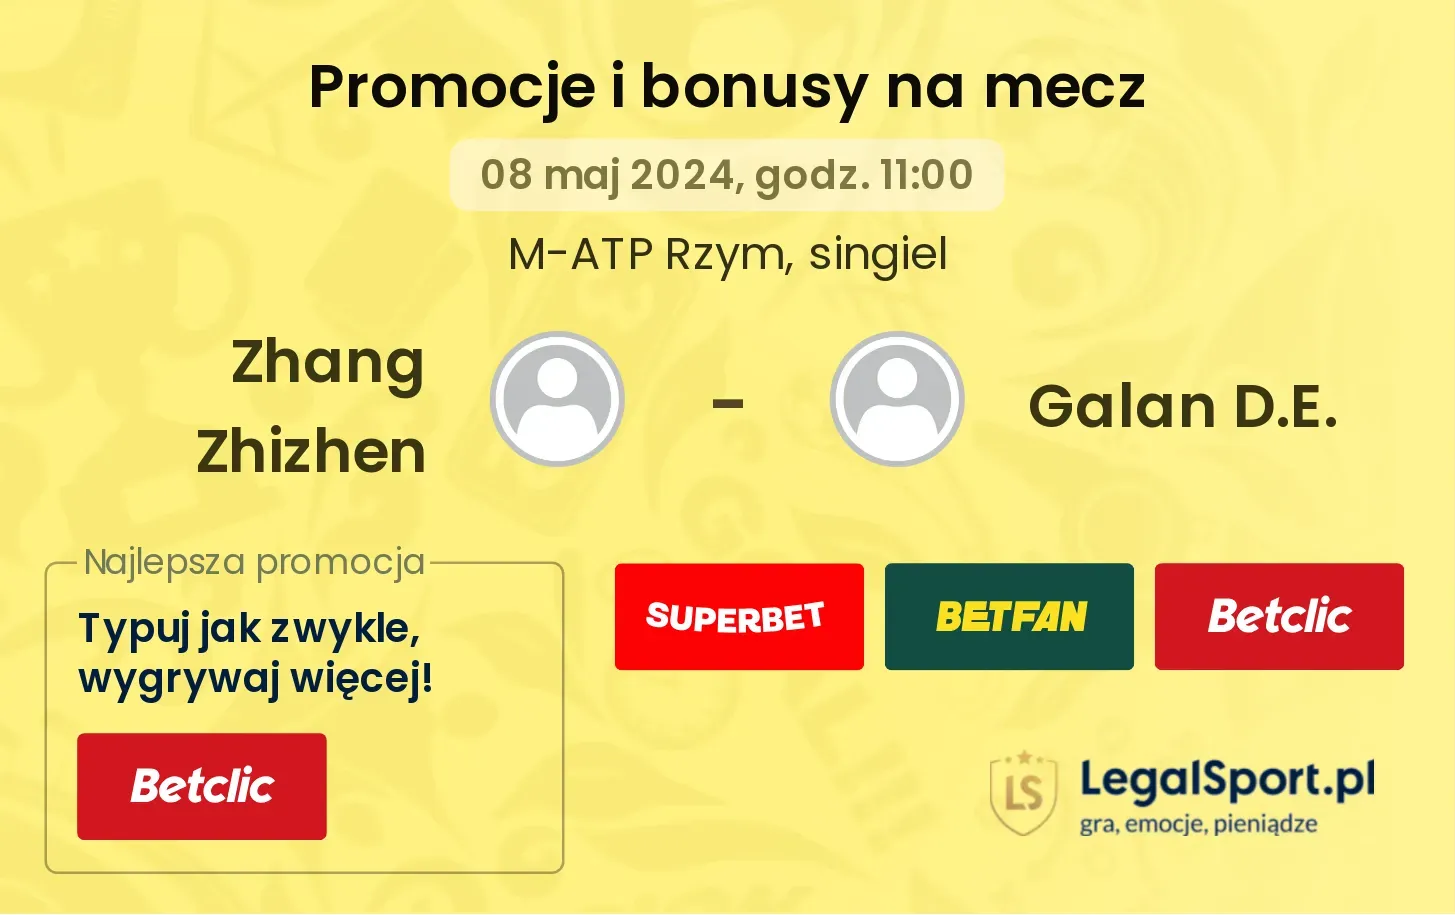 Zhang Zhizhen - Galan D.E. promocje bonusy na mecz